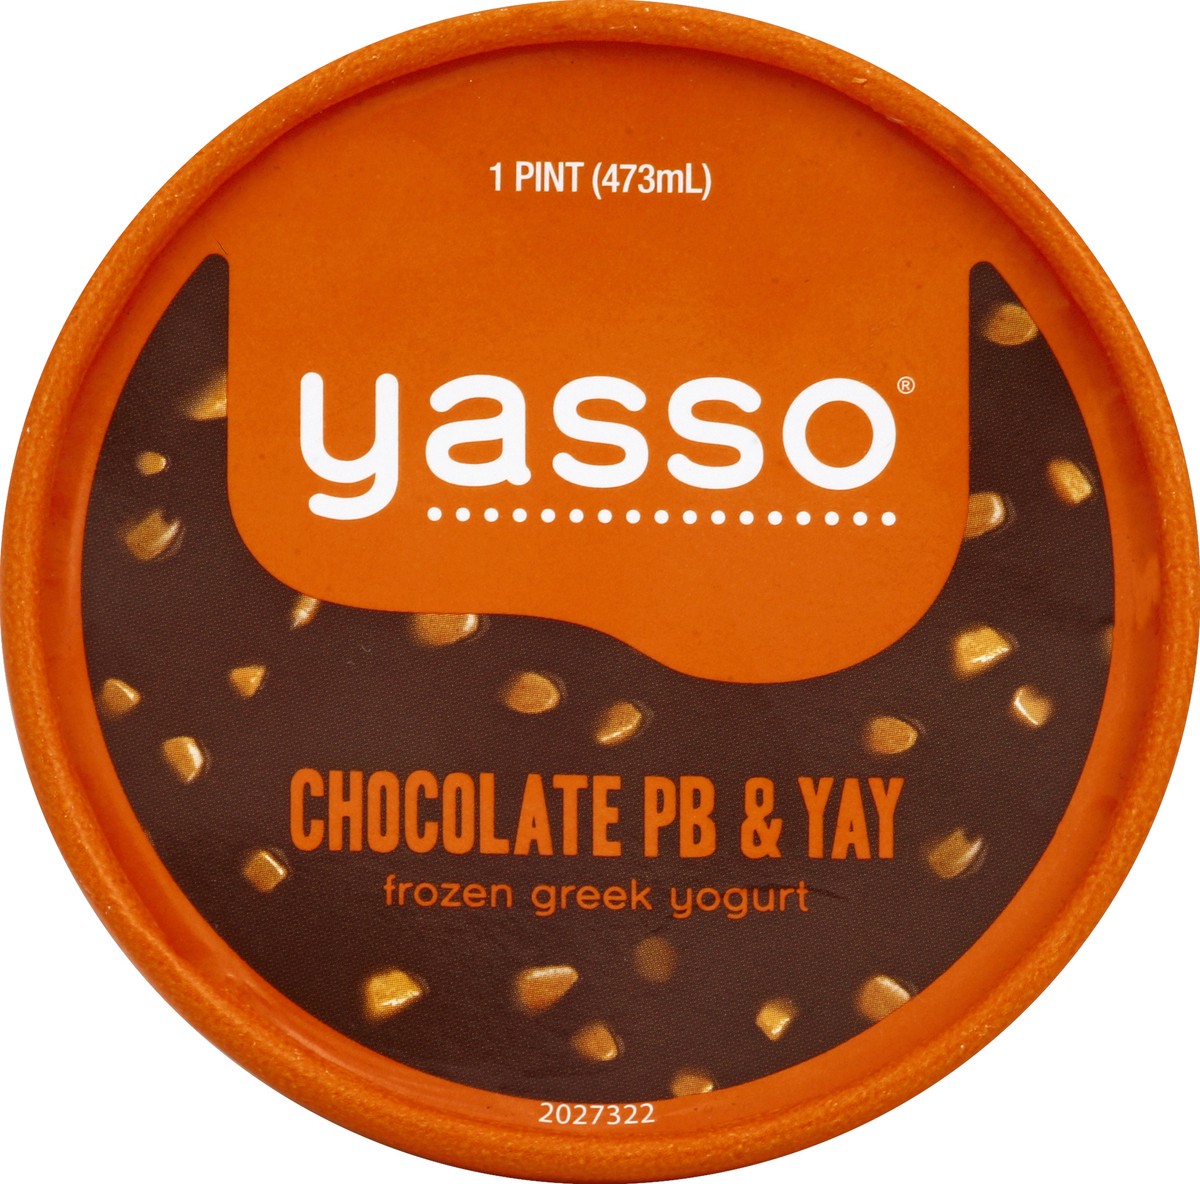 slide 2 of 3, Yasso Chocolate PB & Yay Frozen Greek Yogurt, 1 pint